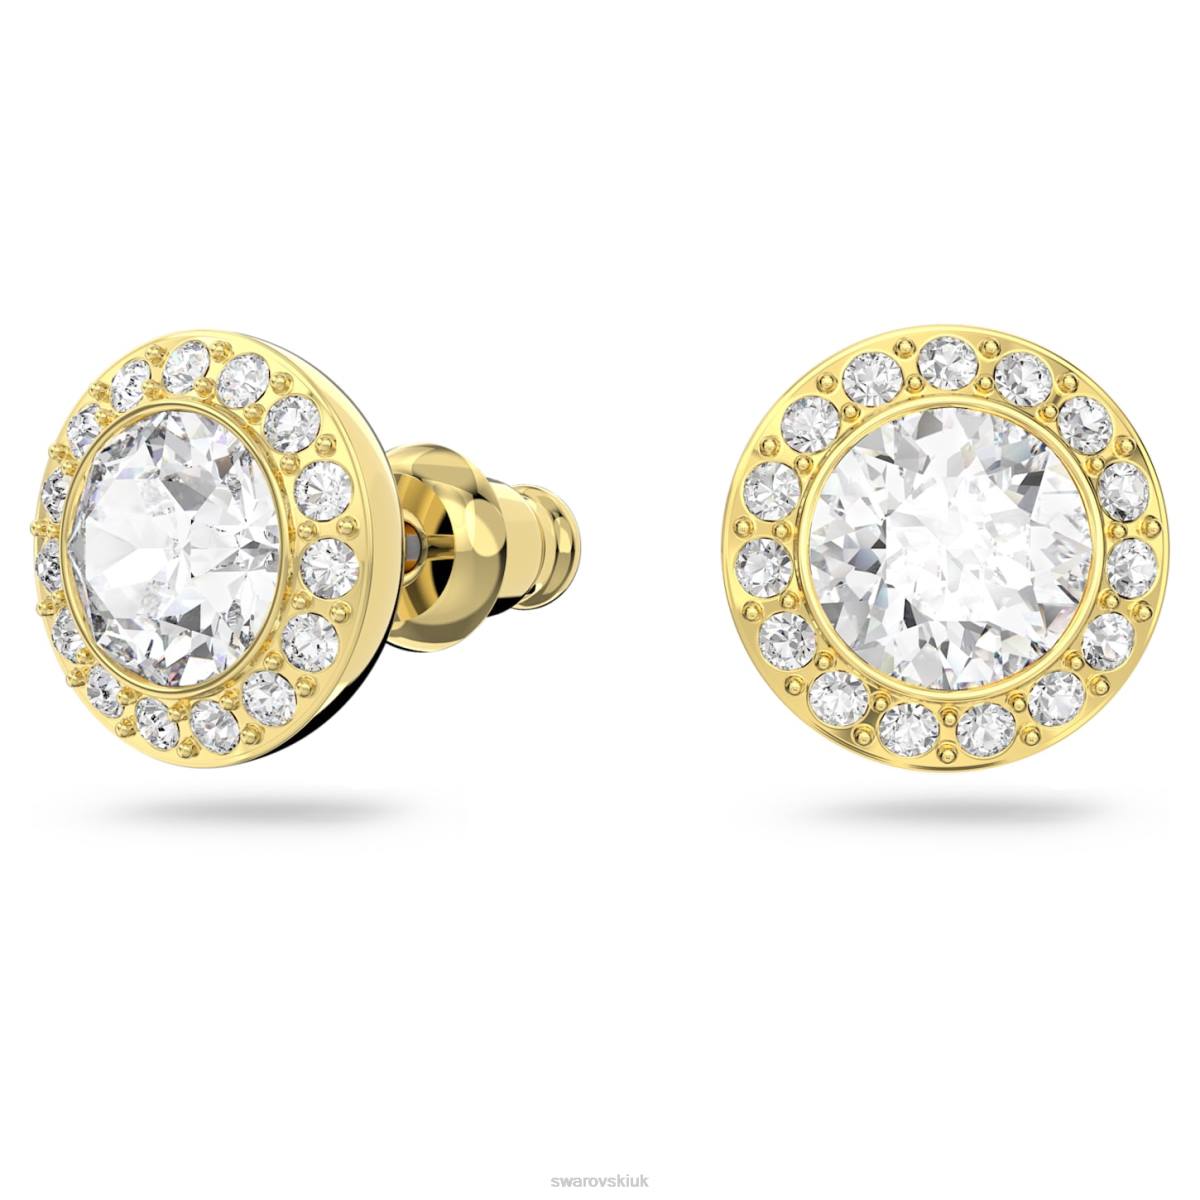 Jewelry Swarovski Angelic stud earrings Round cut, White, Gold-tone plated 48JX671